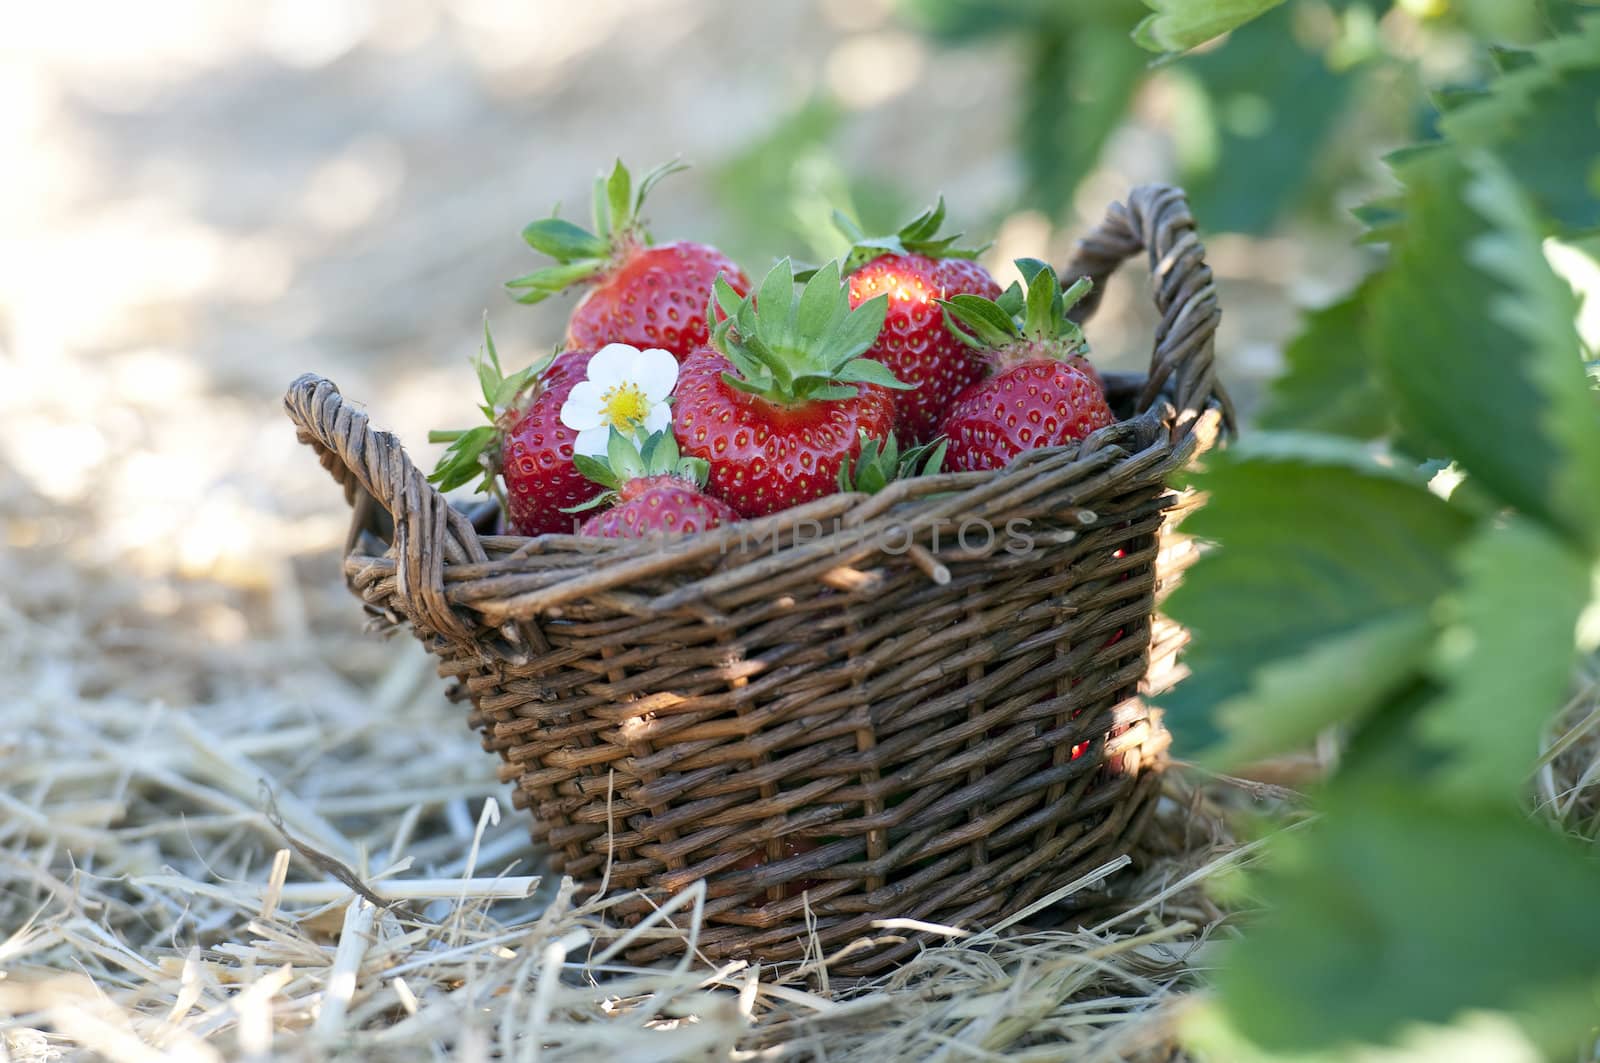 Strawberries in the basket by Rainman